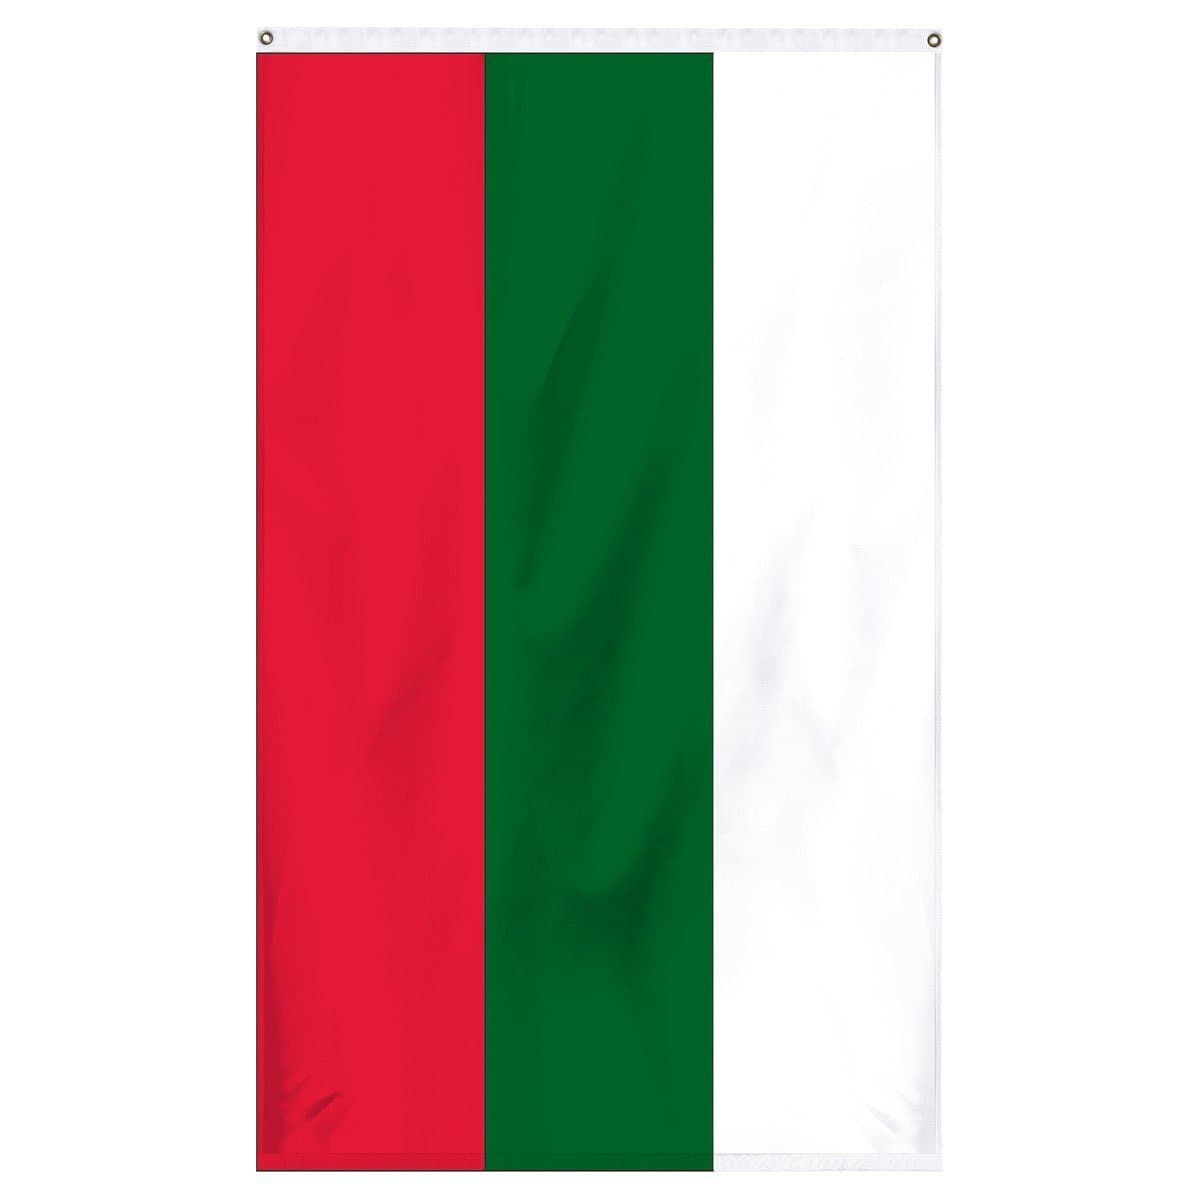 Bulgaria international flag for sale in America